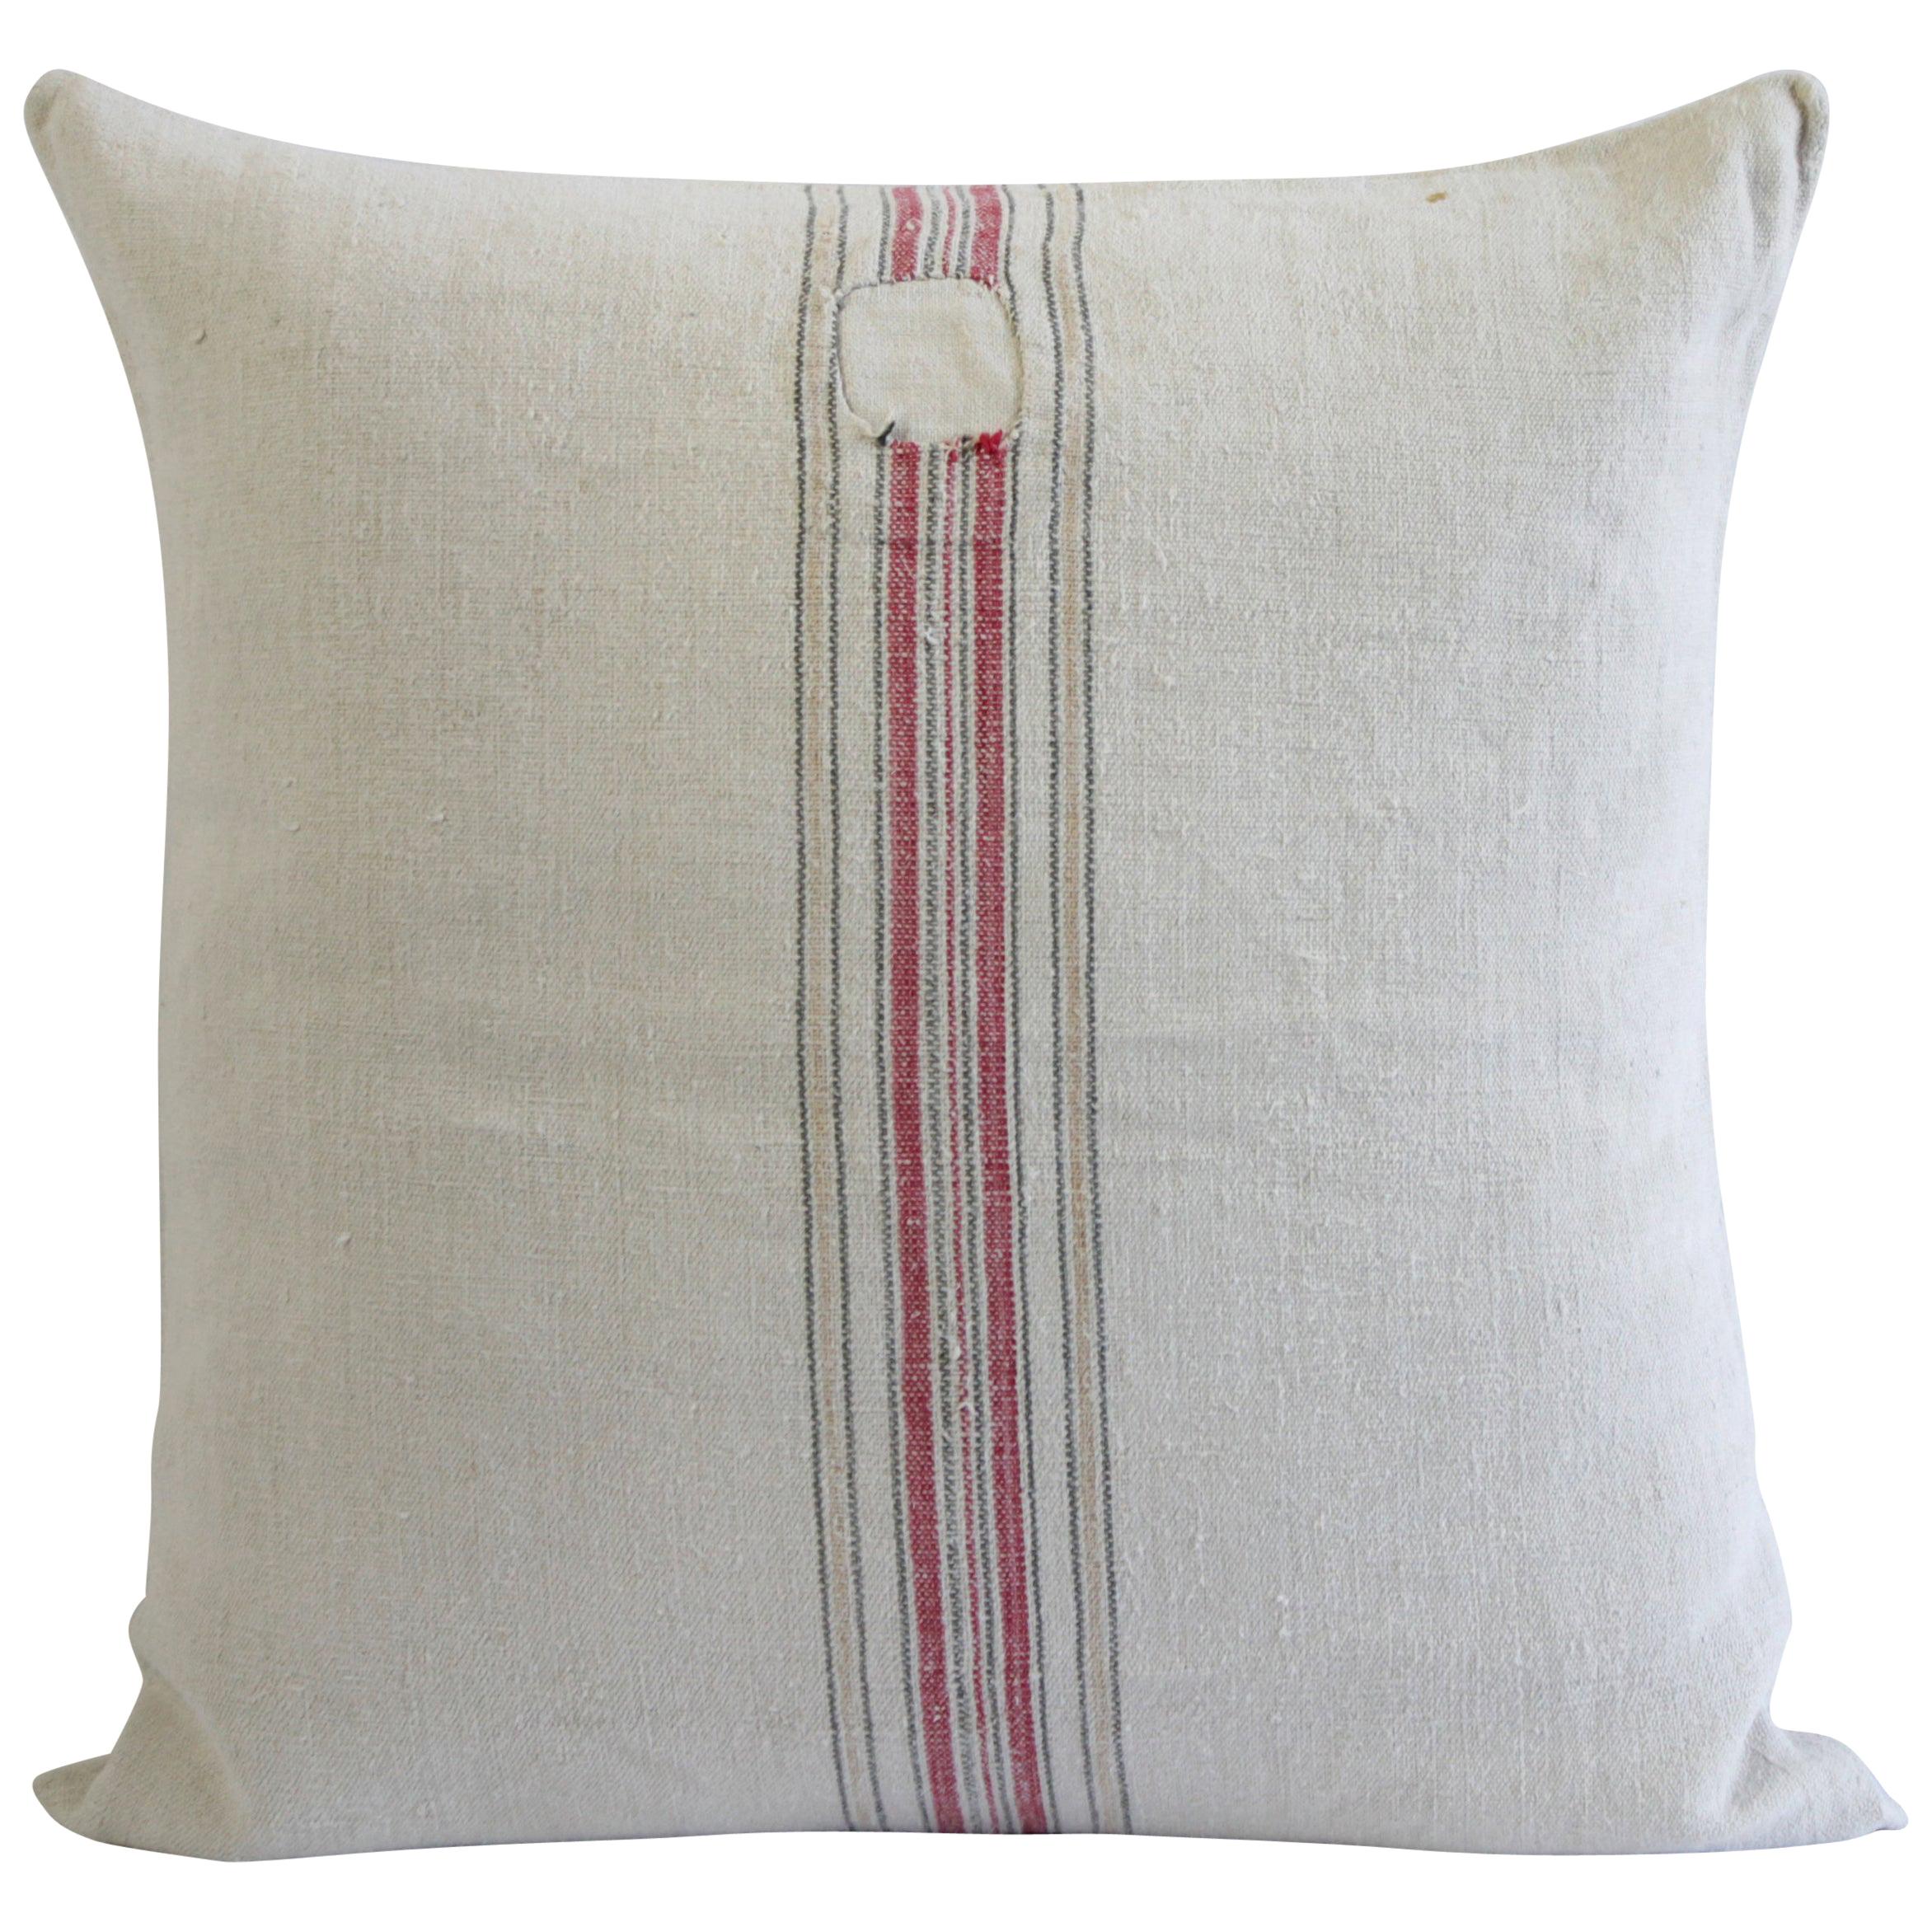 Antique Nubby 19th Century European Red and Tan Stripe Grain Sack Pillows